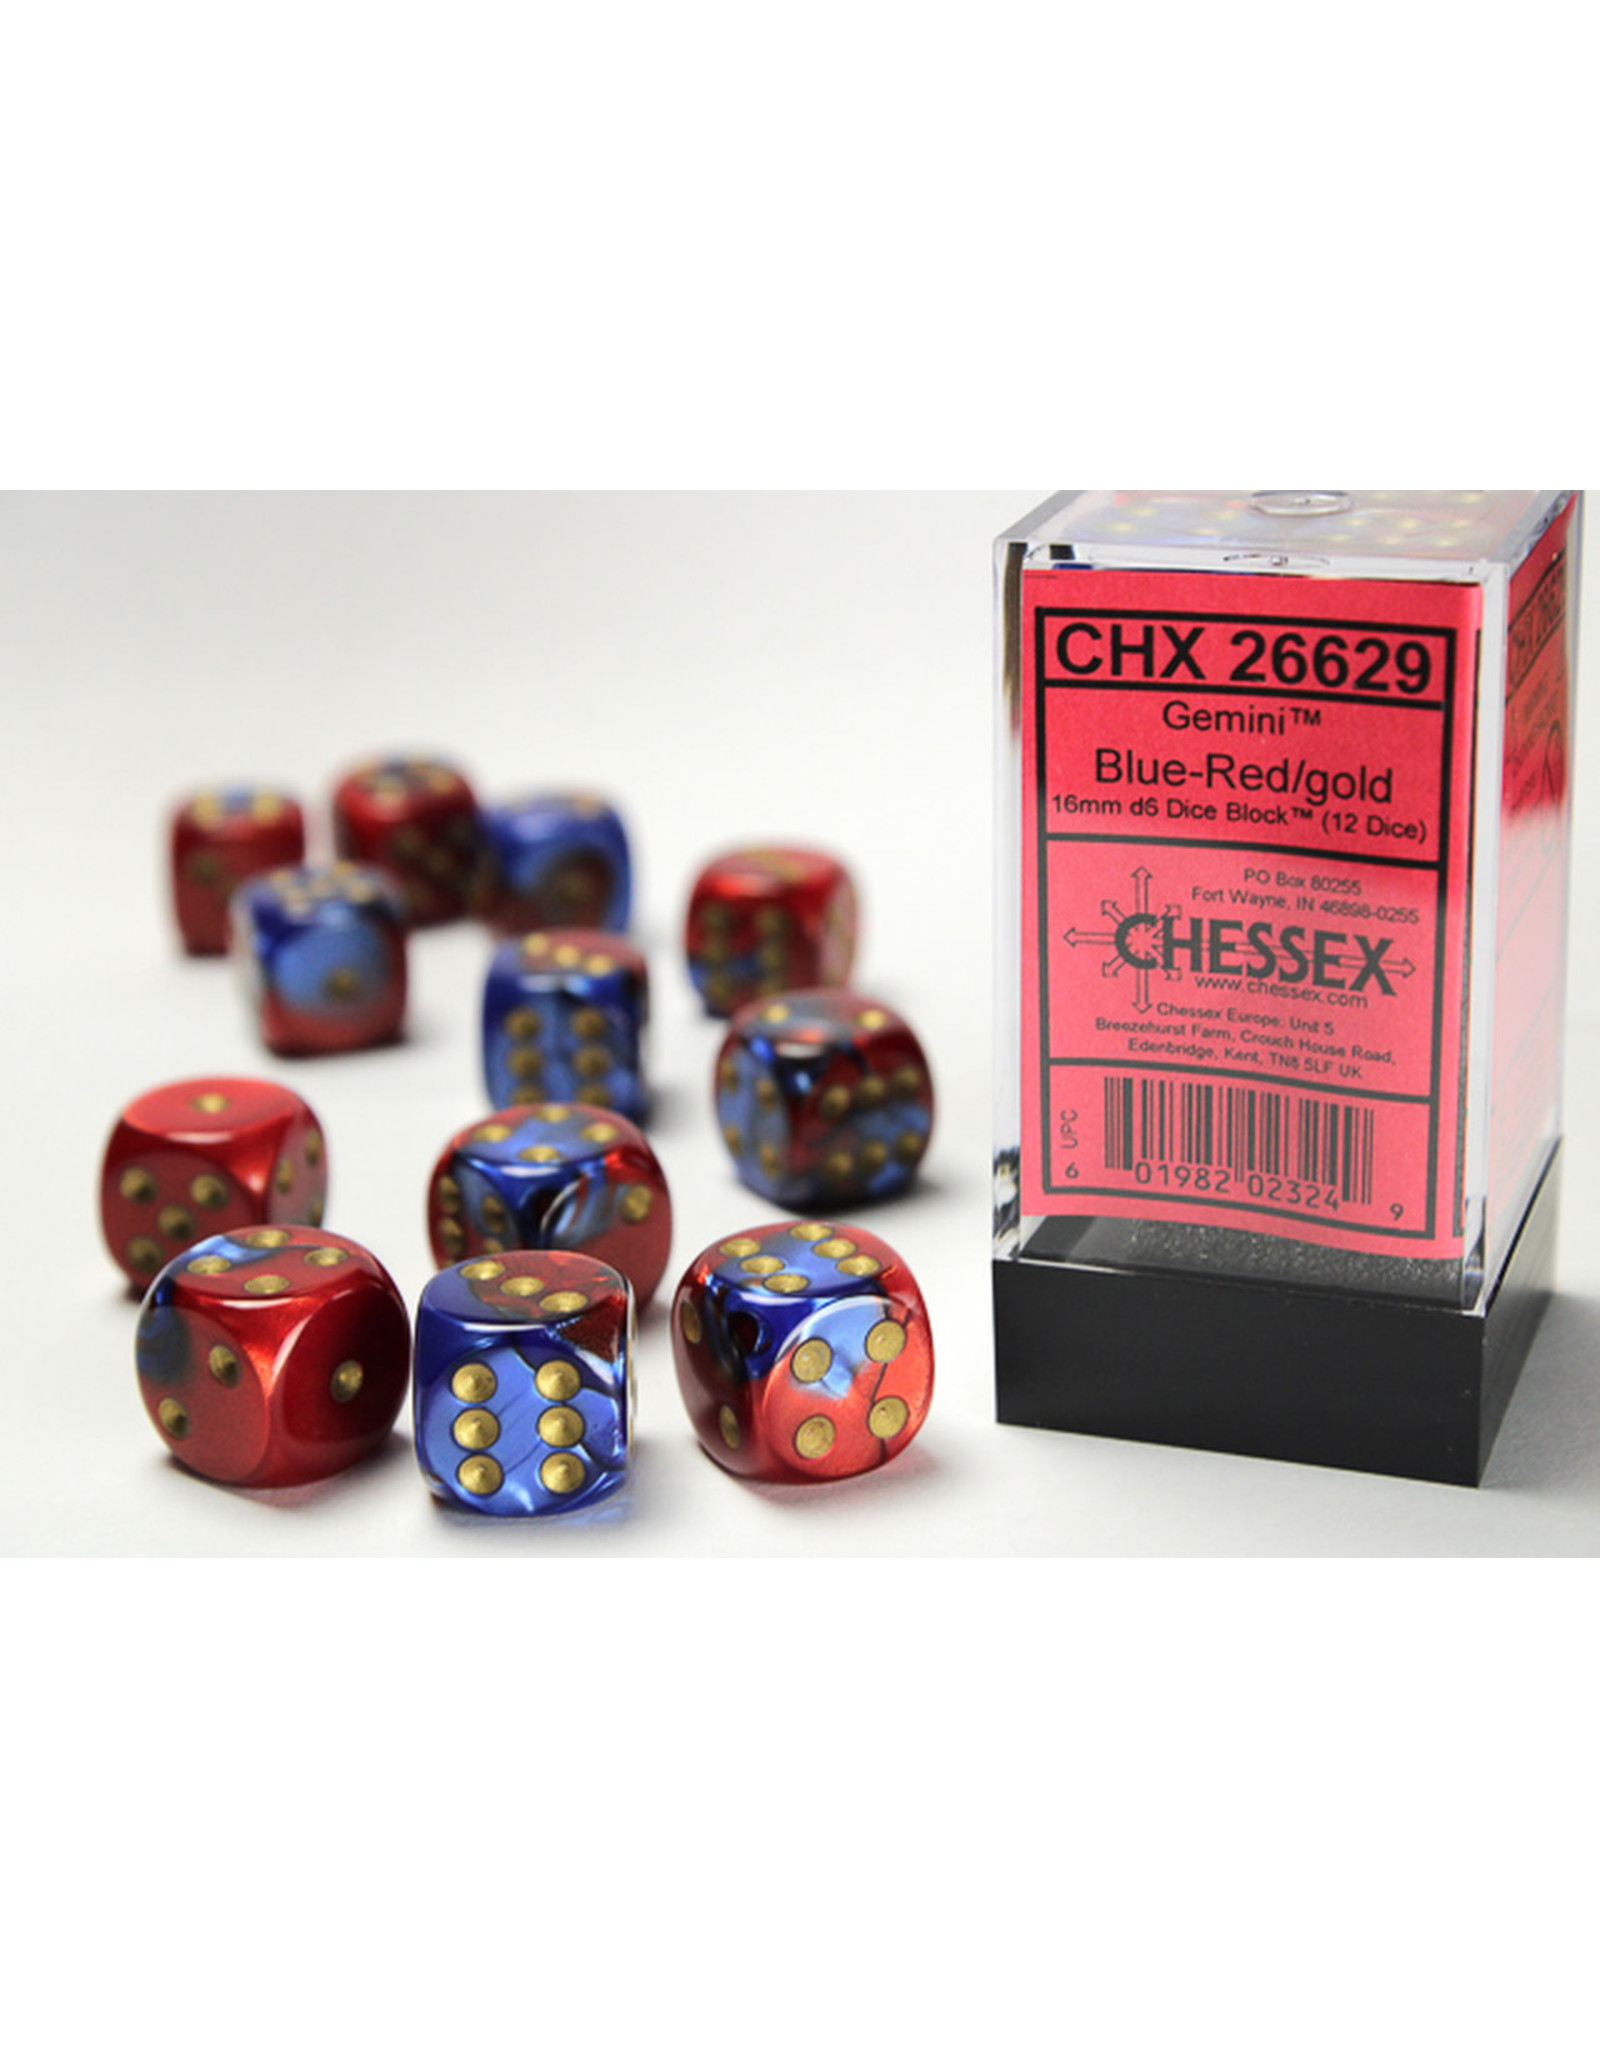 Chessex CHX26629 Gemini 2: 16mm D6 Blue Red/Gold (12)